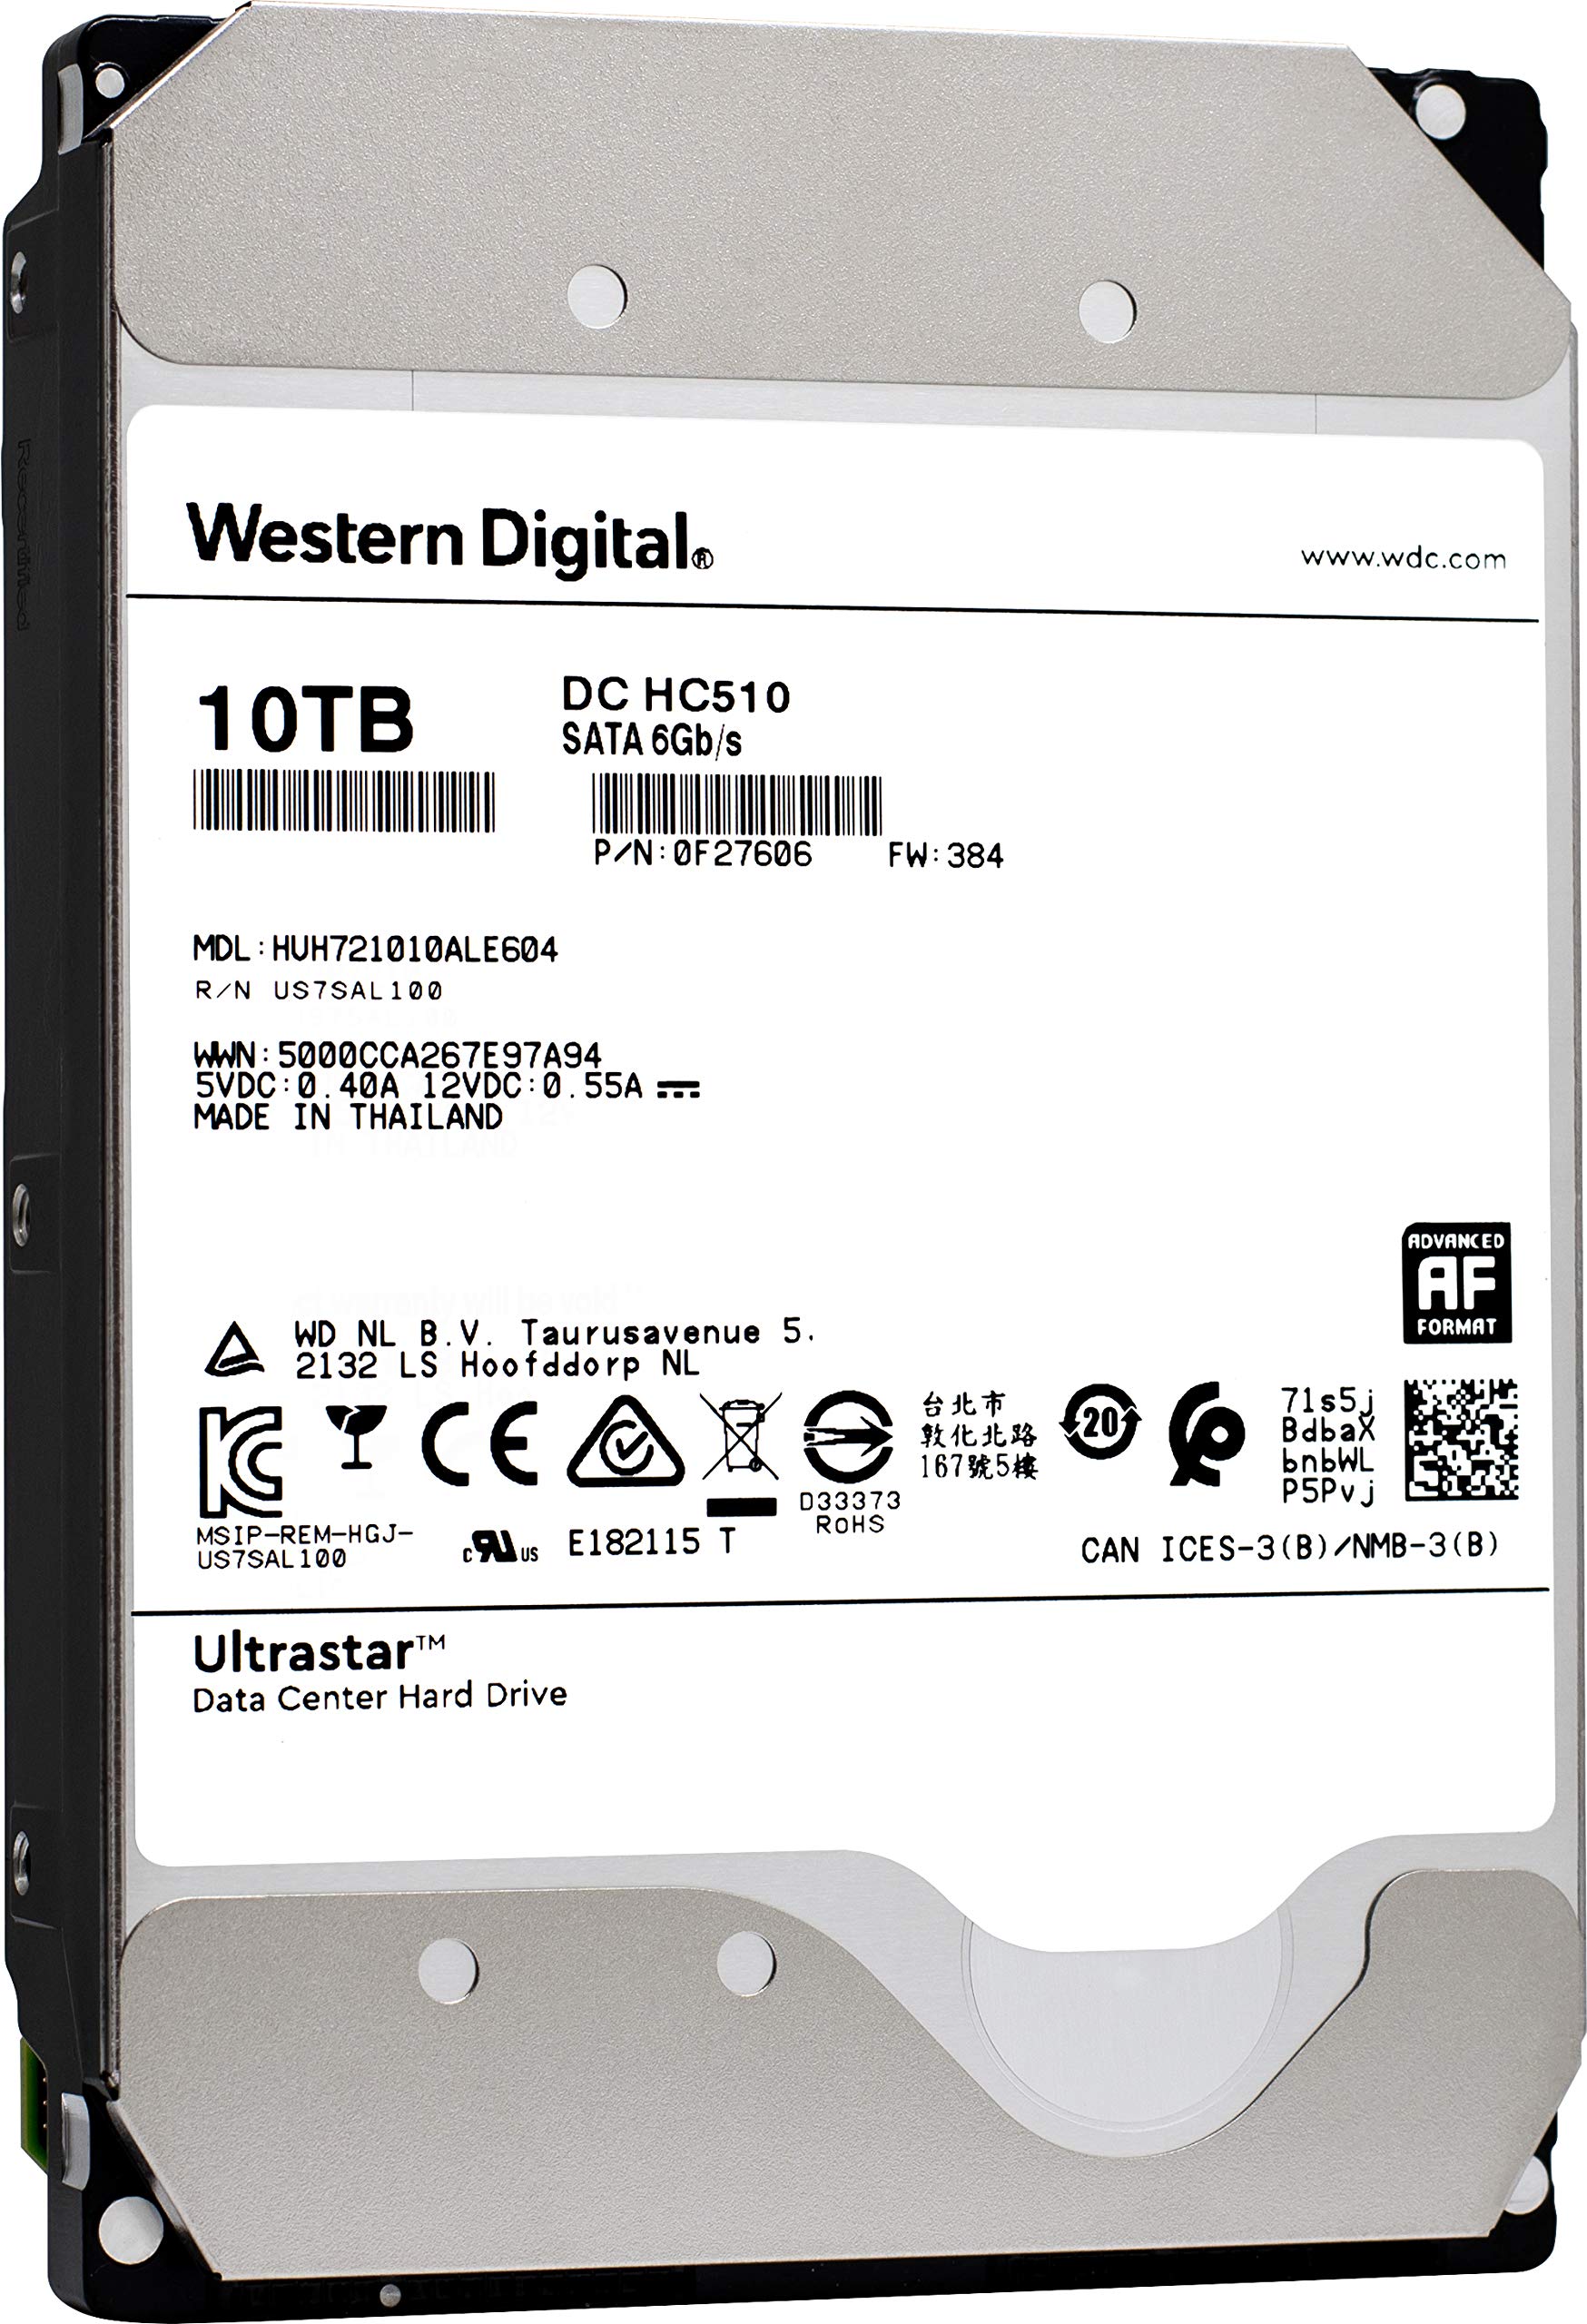 HGST WD Ultrastar DC HC510 10TB 7200 RPM SATA 6Gb / s 3.5 'Helium Platform Enterprise Hard Disk Drive - HUH721010ALE604 (0F27606)